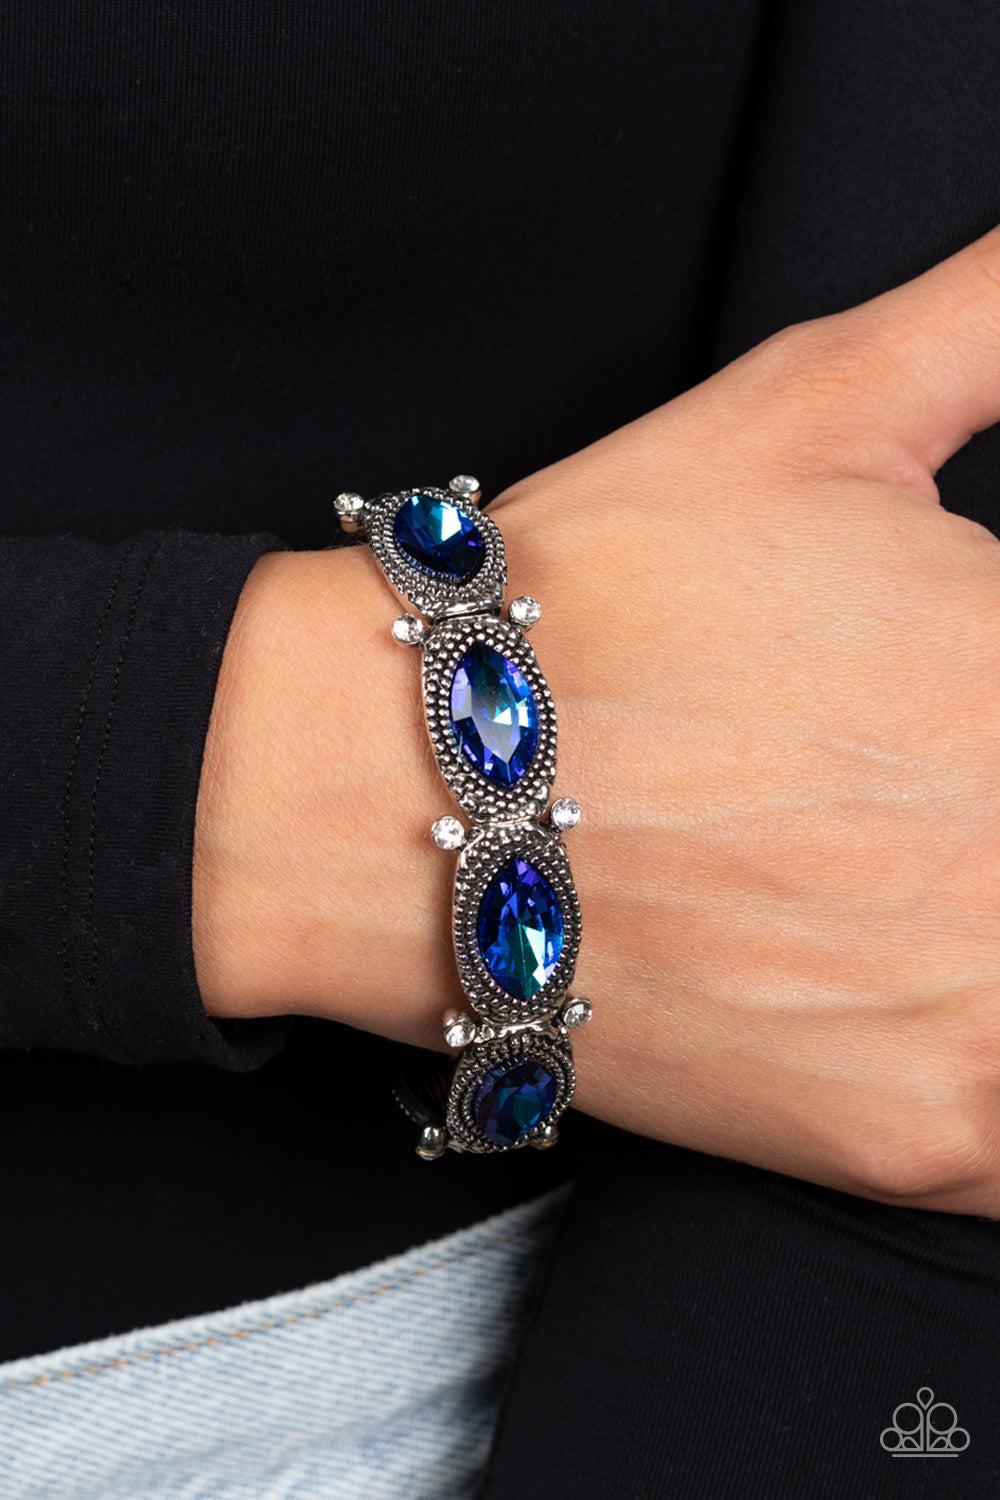 Dancing Diva Blue Rhinestone Bracelet - Paparazzi Accessories- lightbox - CarasShop.com - $5 Jewelry by Cara Jewels